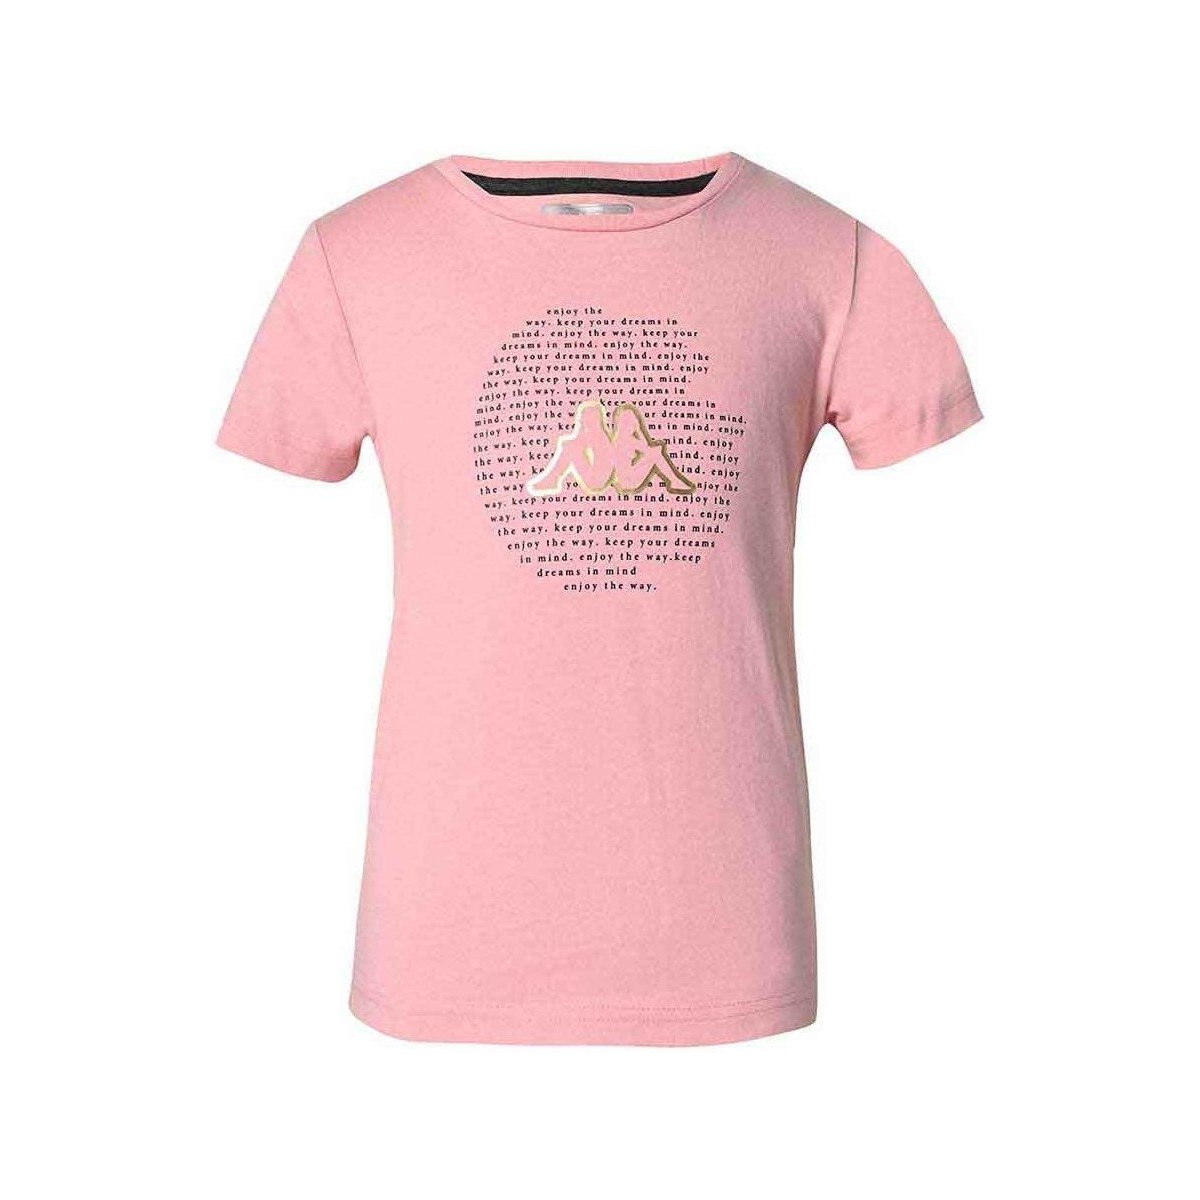 Kappa Rose T-shirt Bessy CoIADtZ9